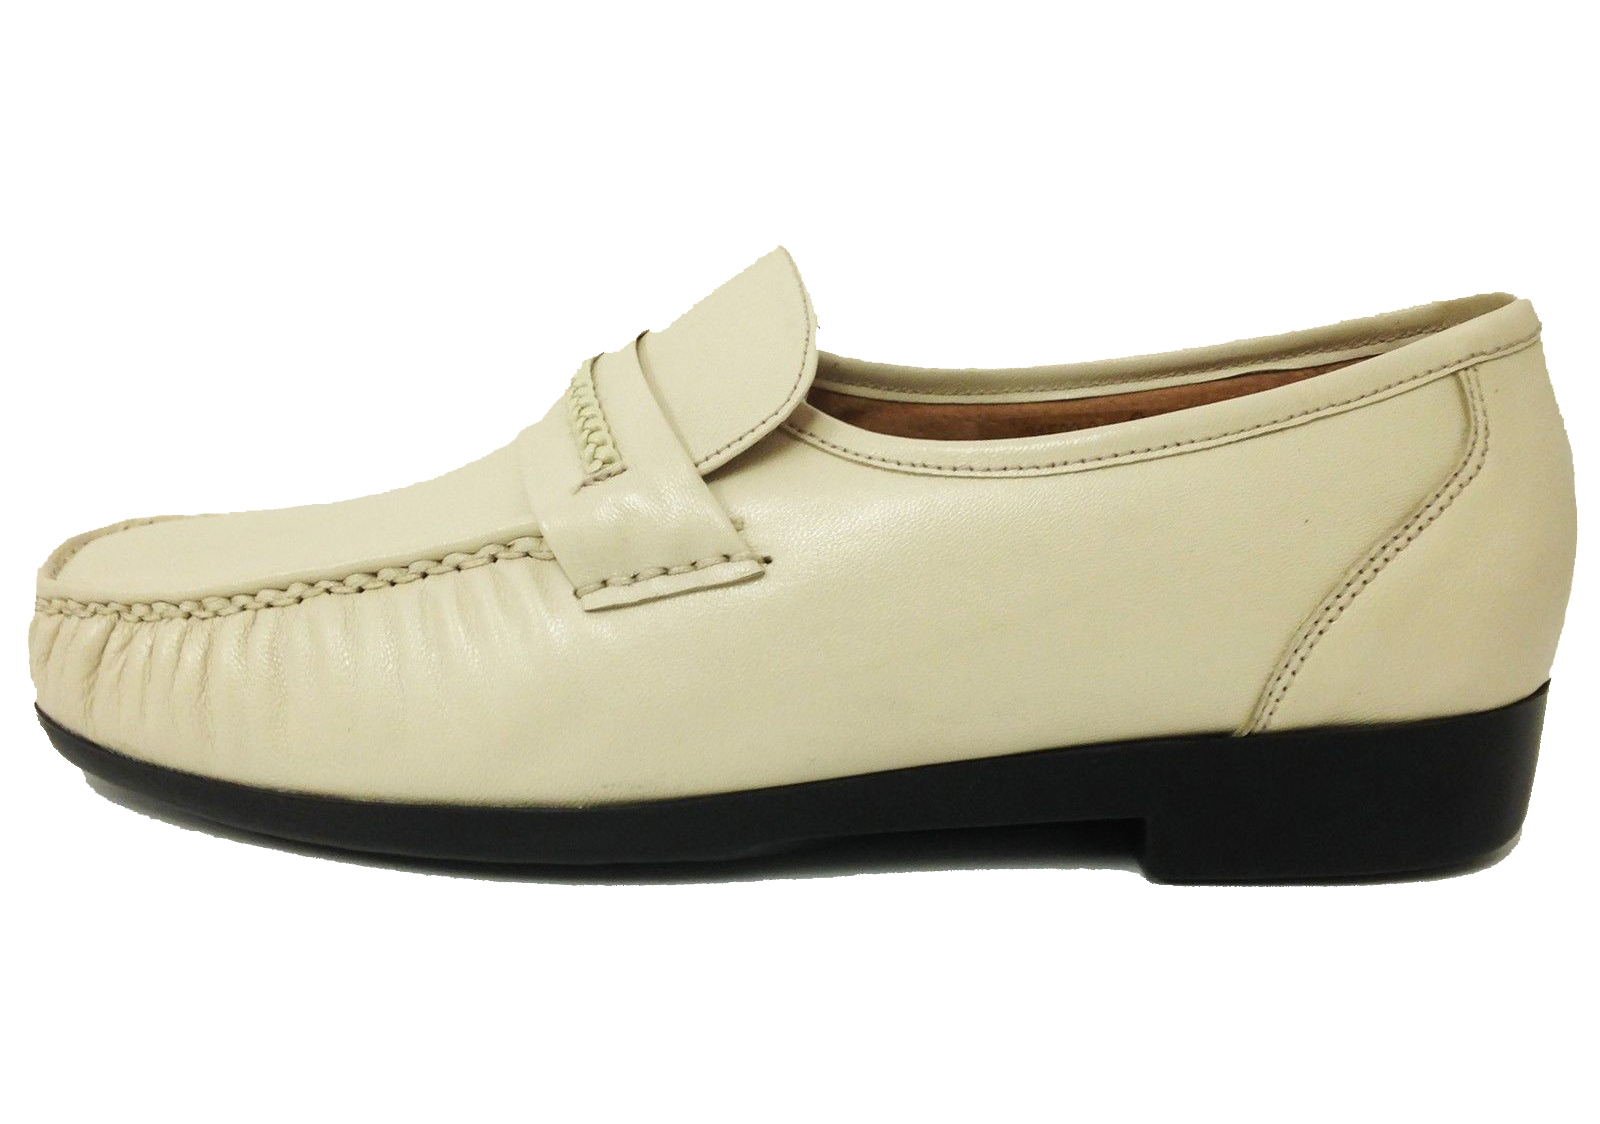 Men's Dress Loafers Leather Moc Toe Slip On Comfort Moccasin Shoes - image 2 of 3